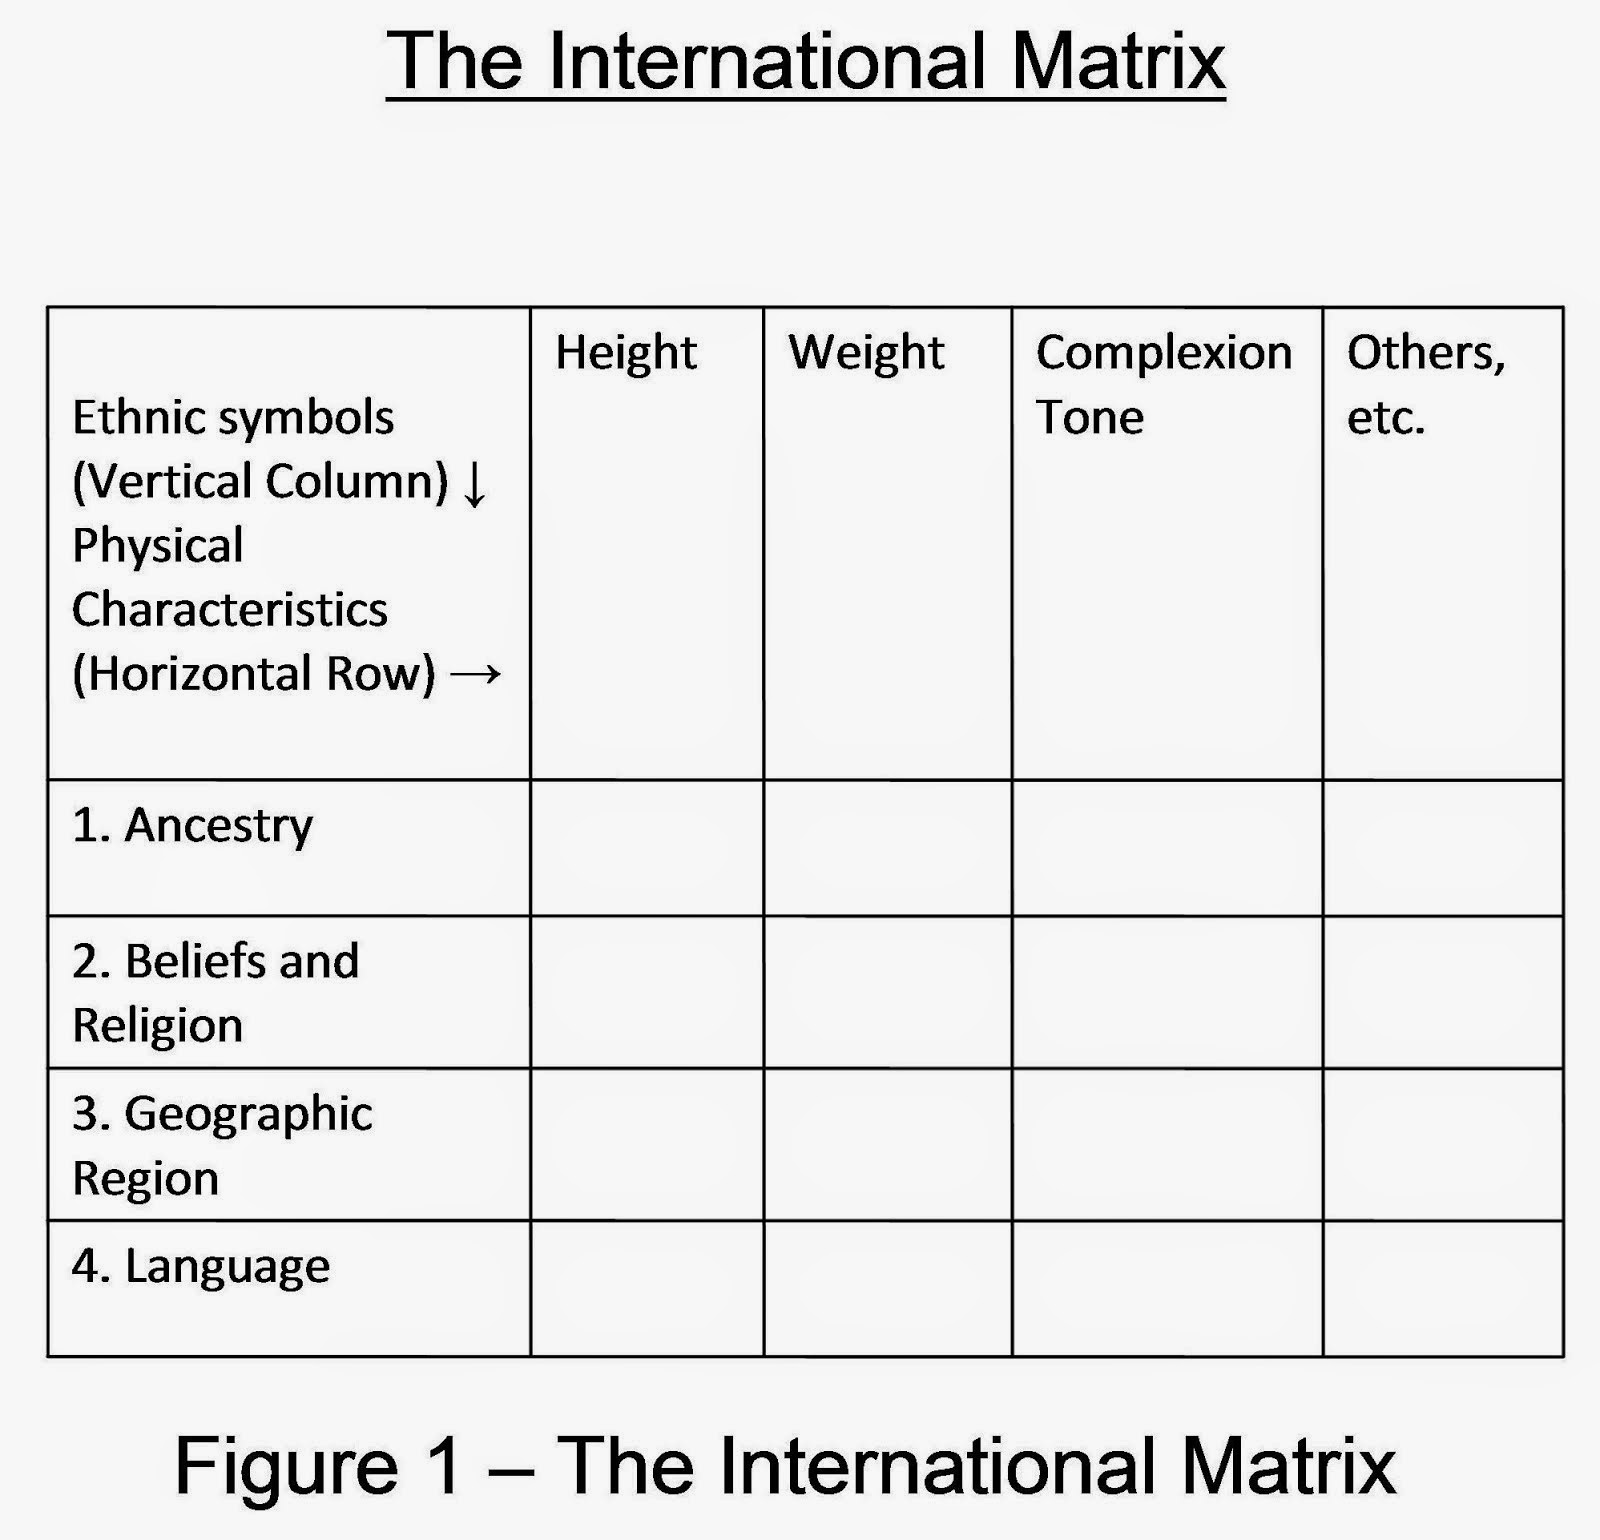 The International Matrix